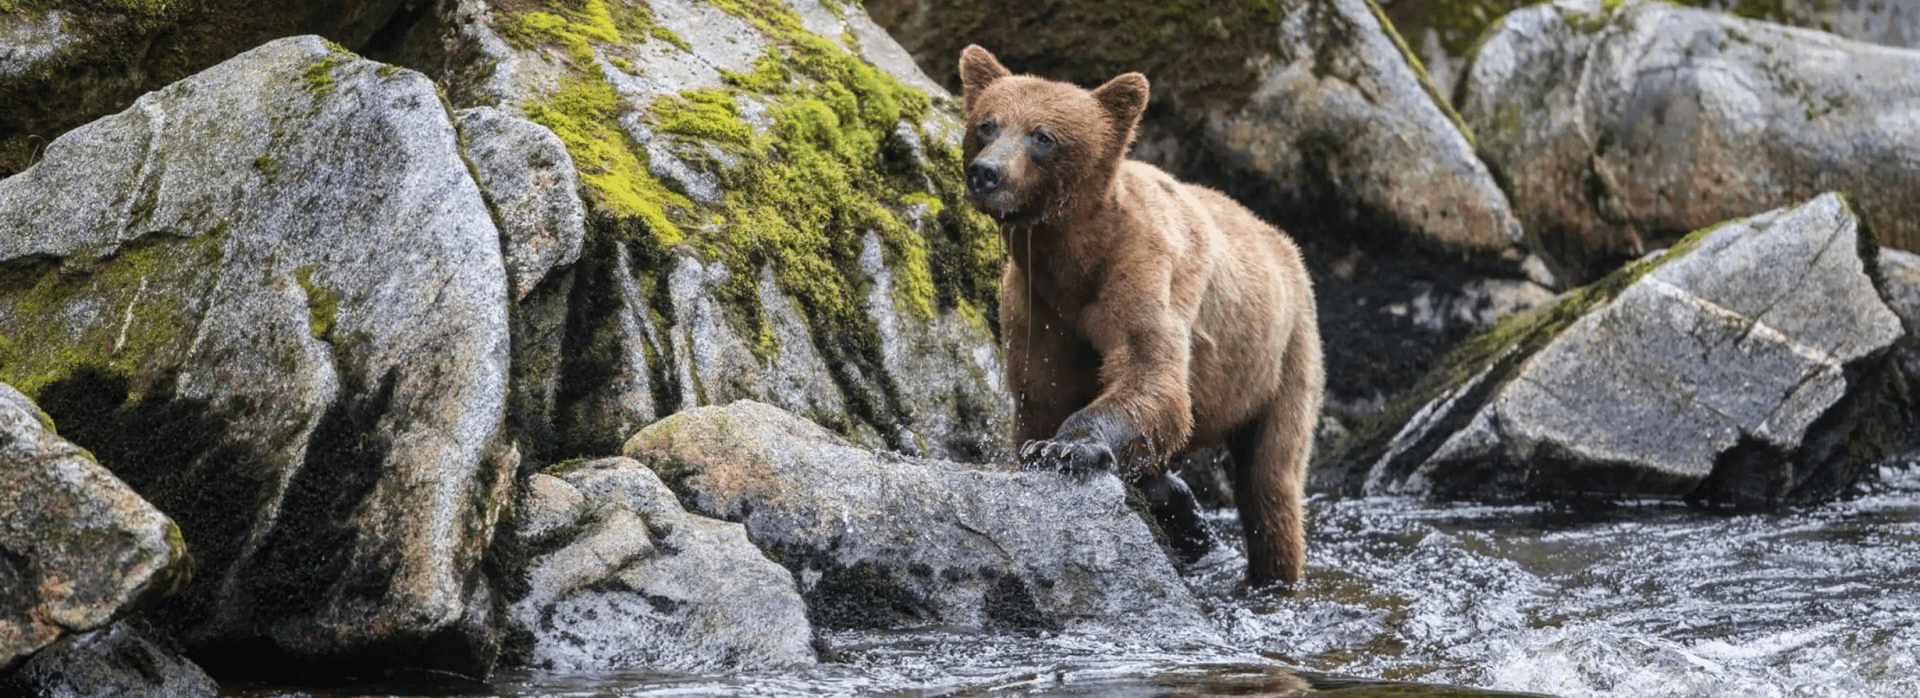 Brown bear, Nature, Water, Carnivore, Fawn, Bedrock